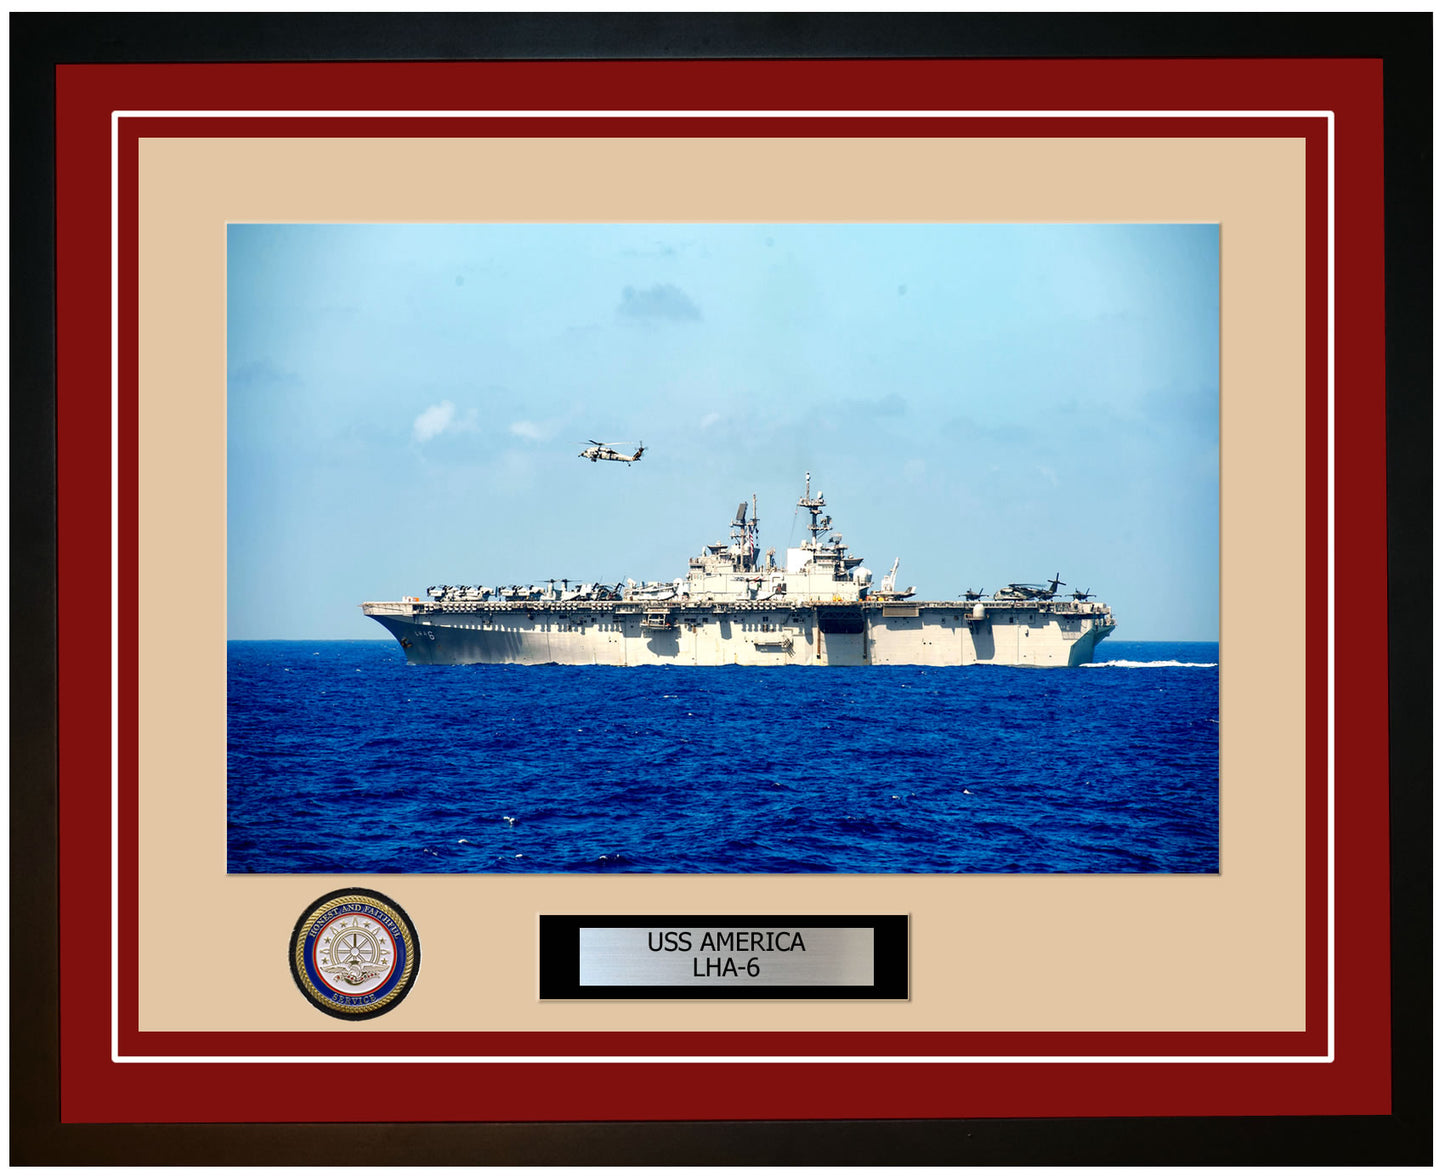 USS America LHA-6 Framed Navy Ship Photo Burgundy